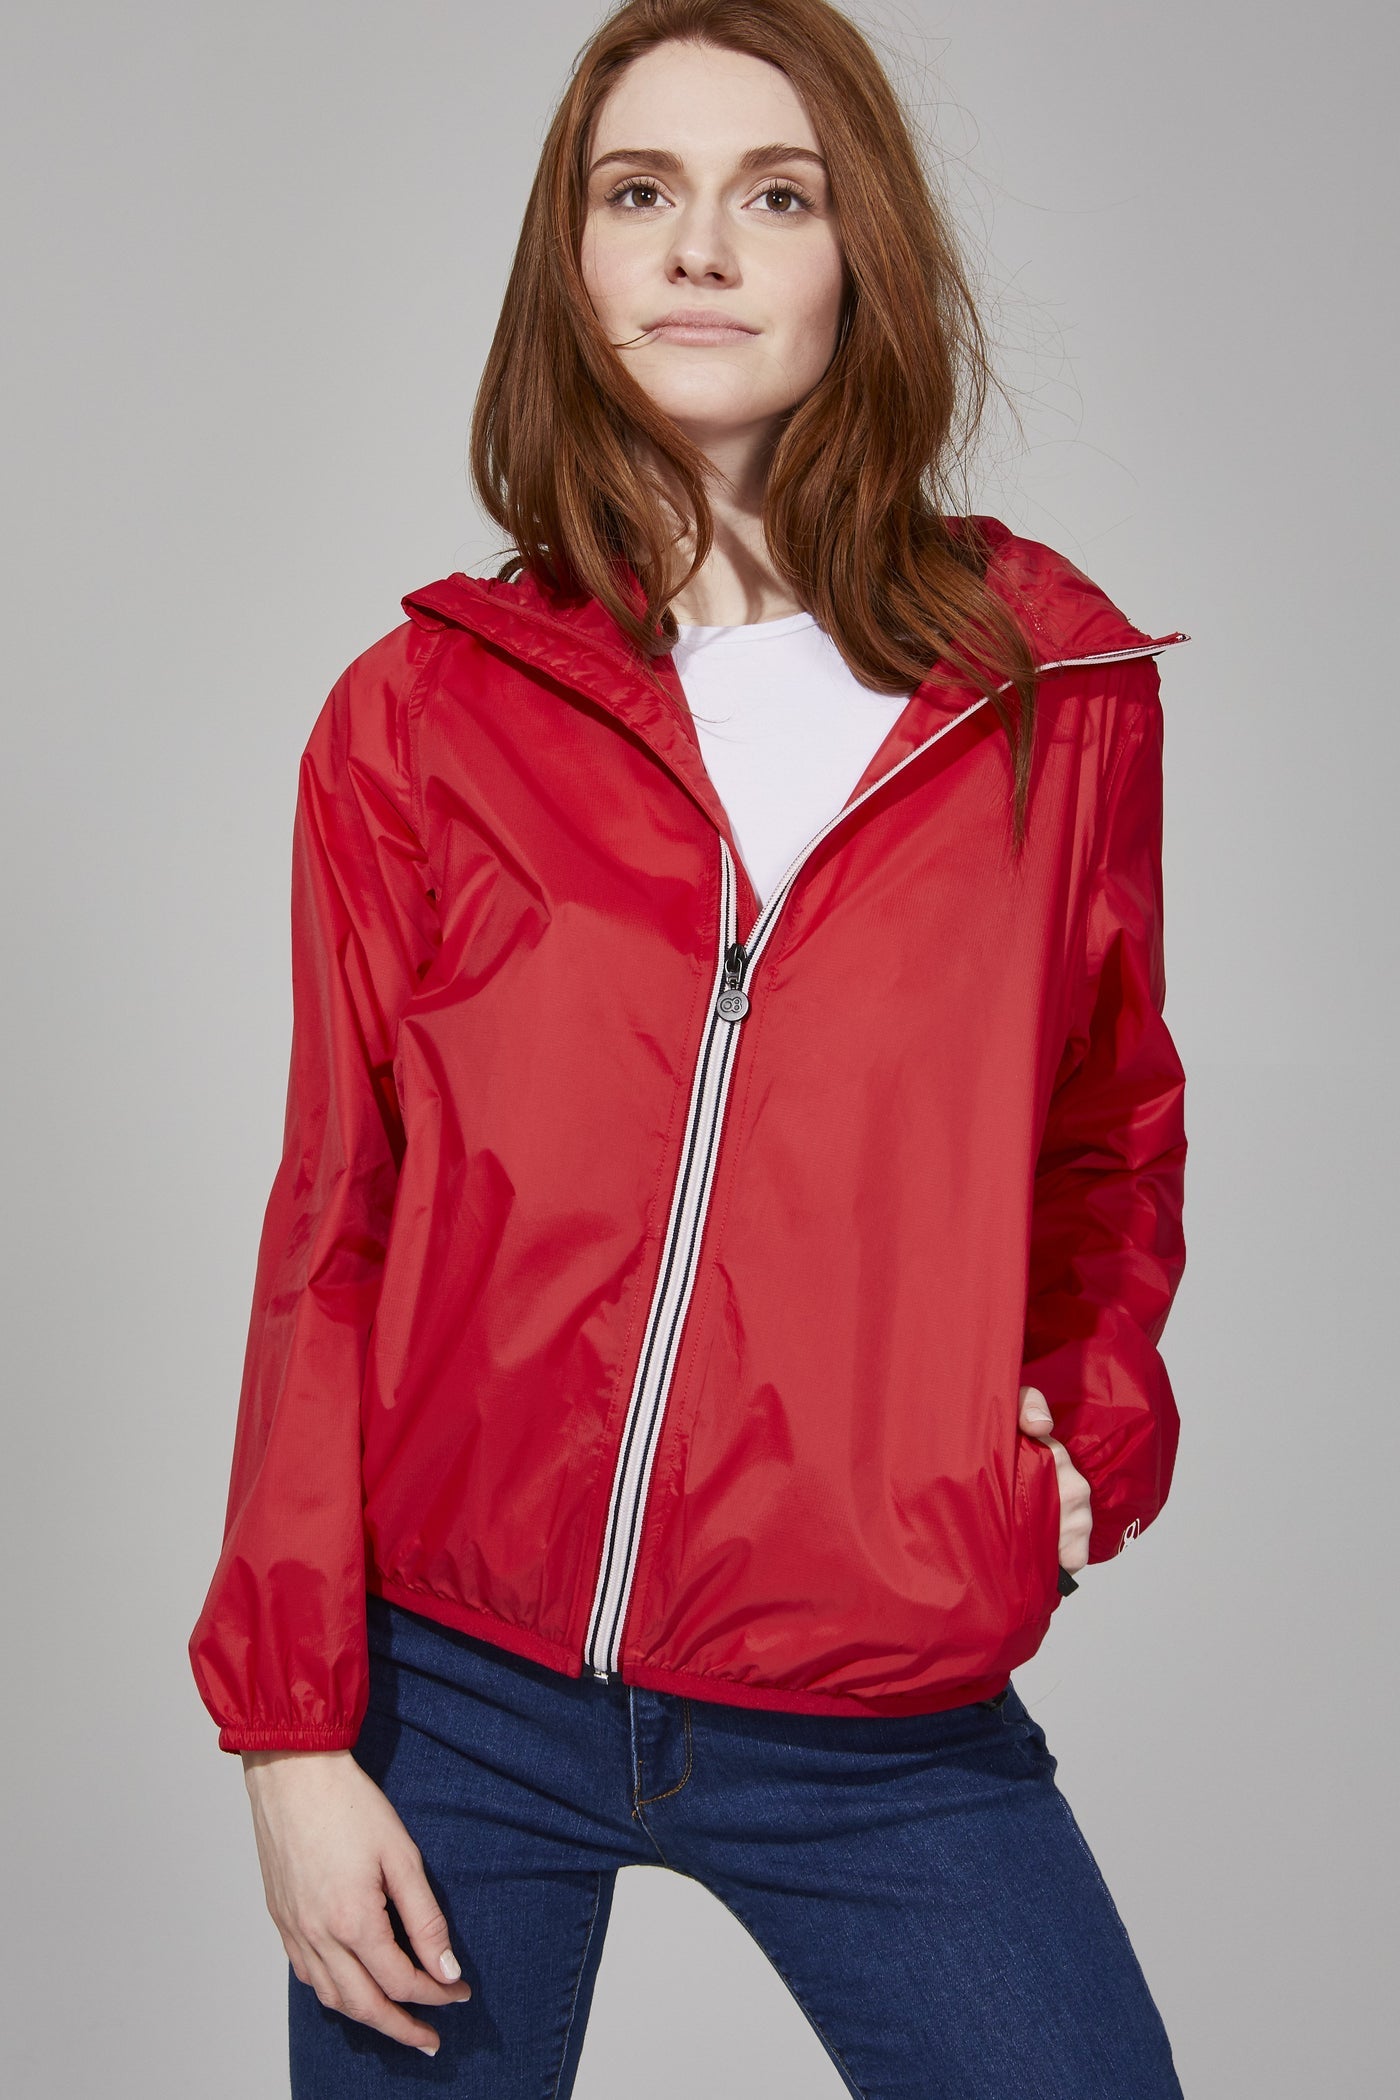 O8 Lifestyle - Sloane Full Zip Packable Rain Jacket